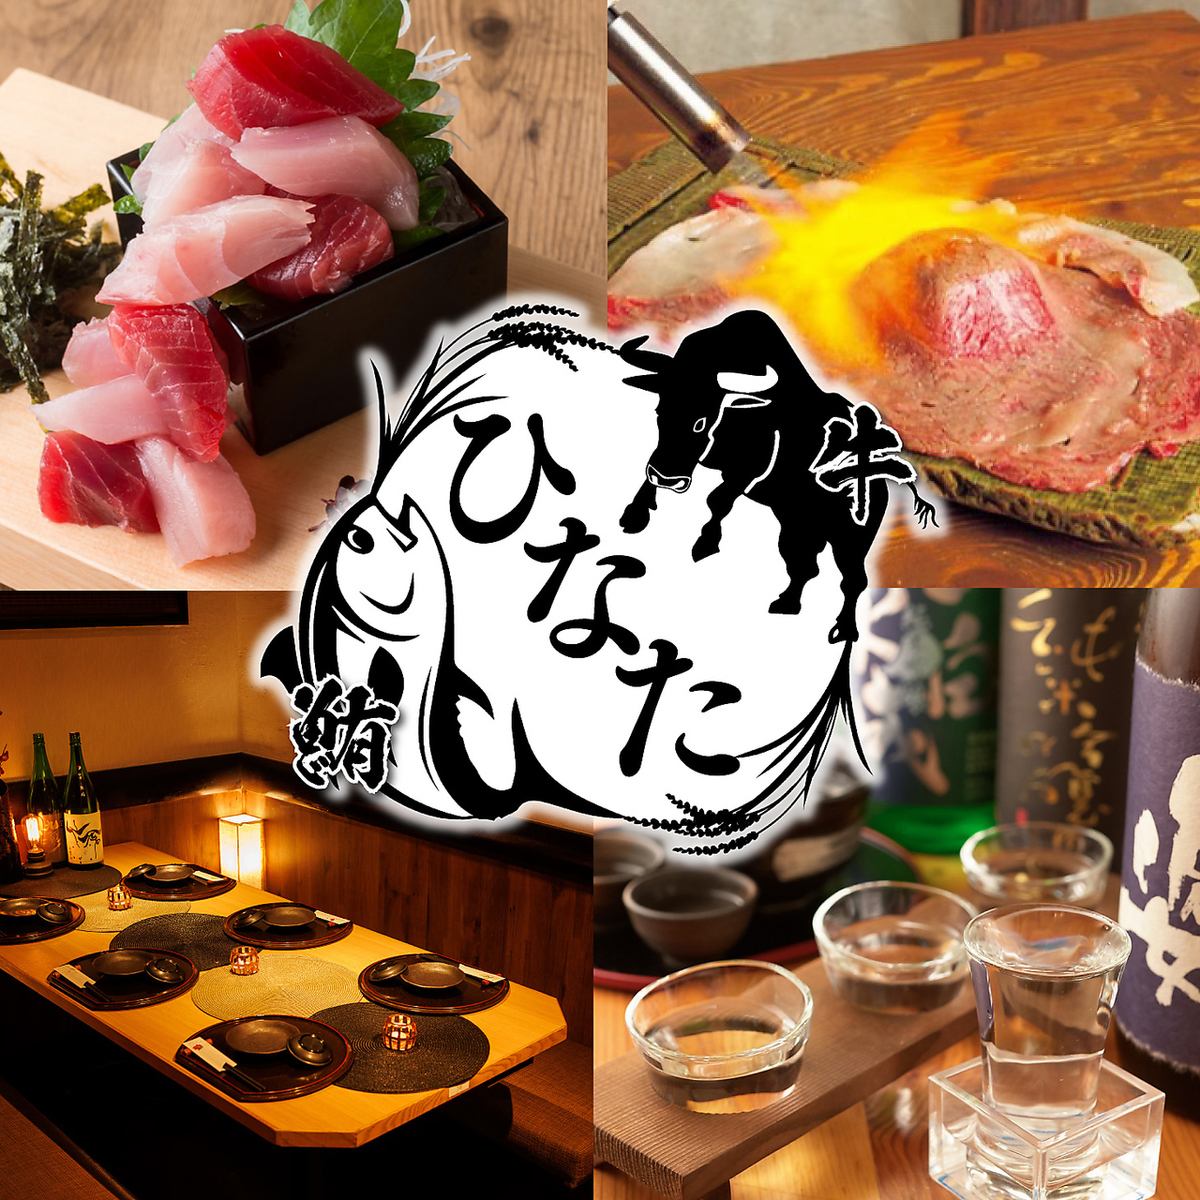 ■ Bluefin tuna x Wagyu Hinata ■ Banquet / entertainment / online reservation 24 hours reception